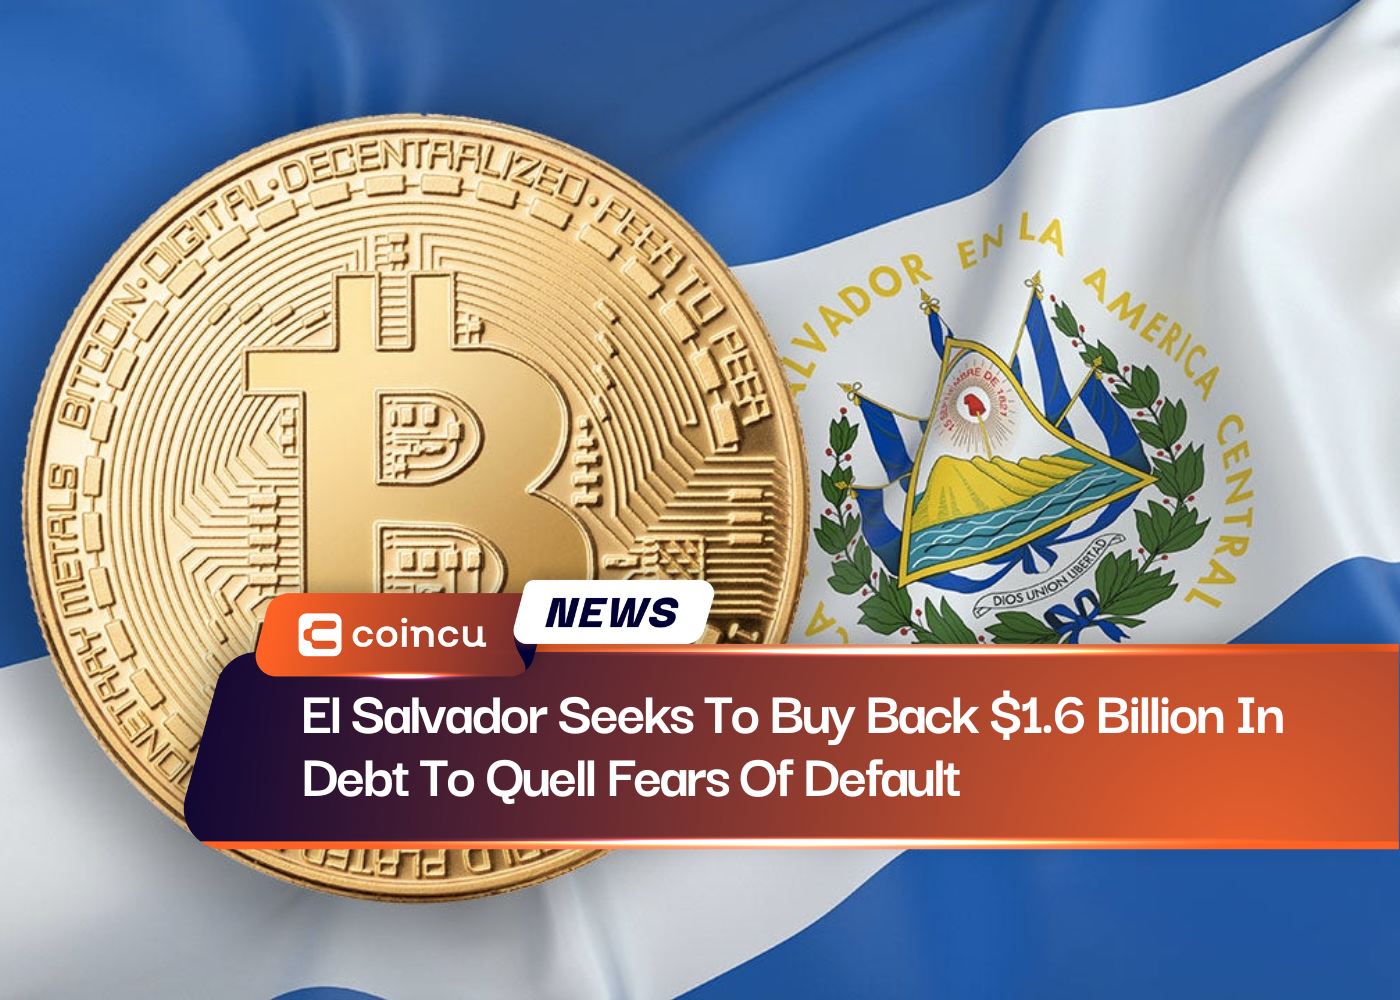 El Salvador Seeks To Buy Back $1.6 Billion In Debt To Quell Fears Of Default